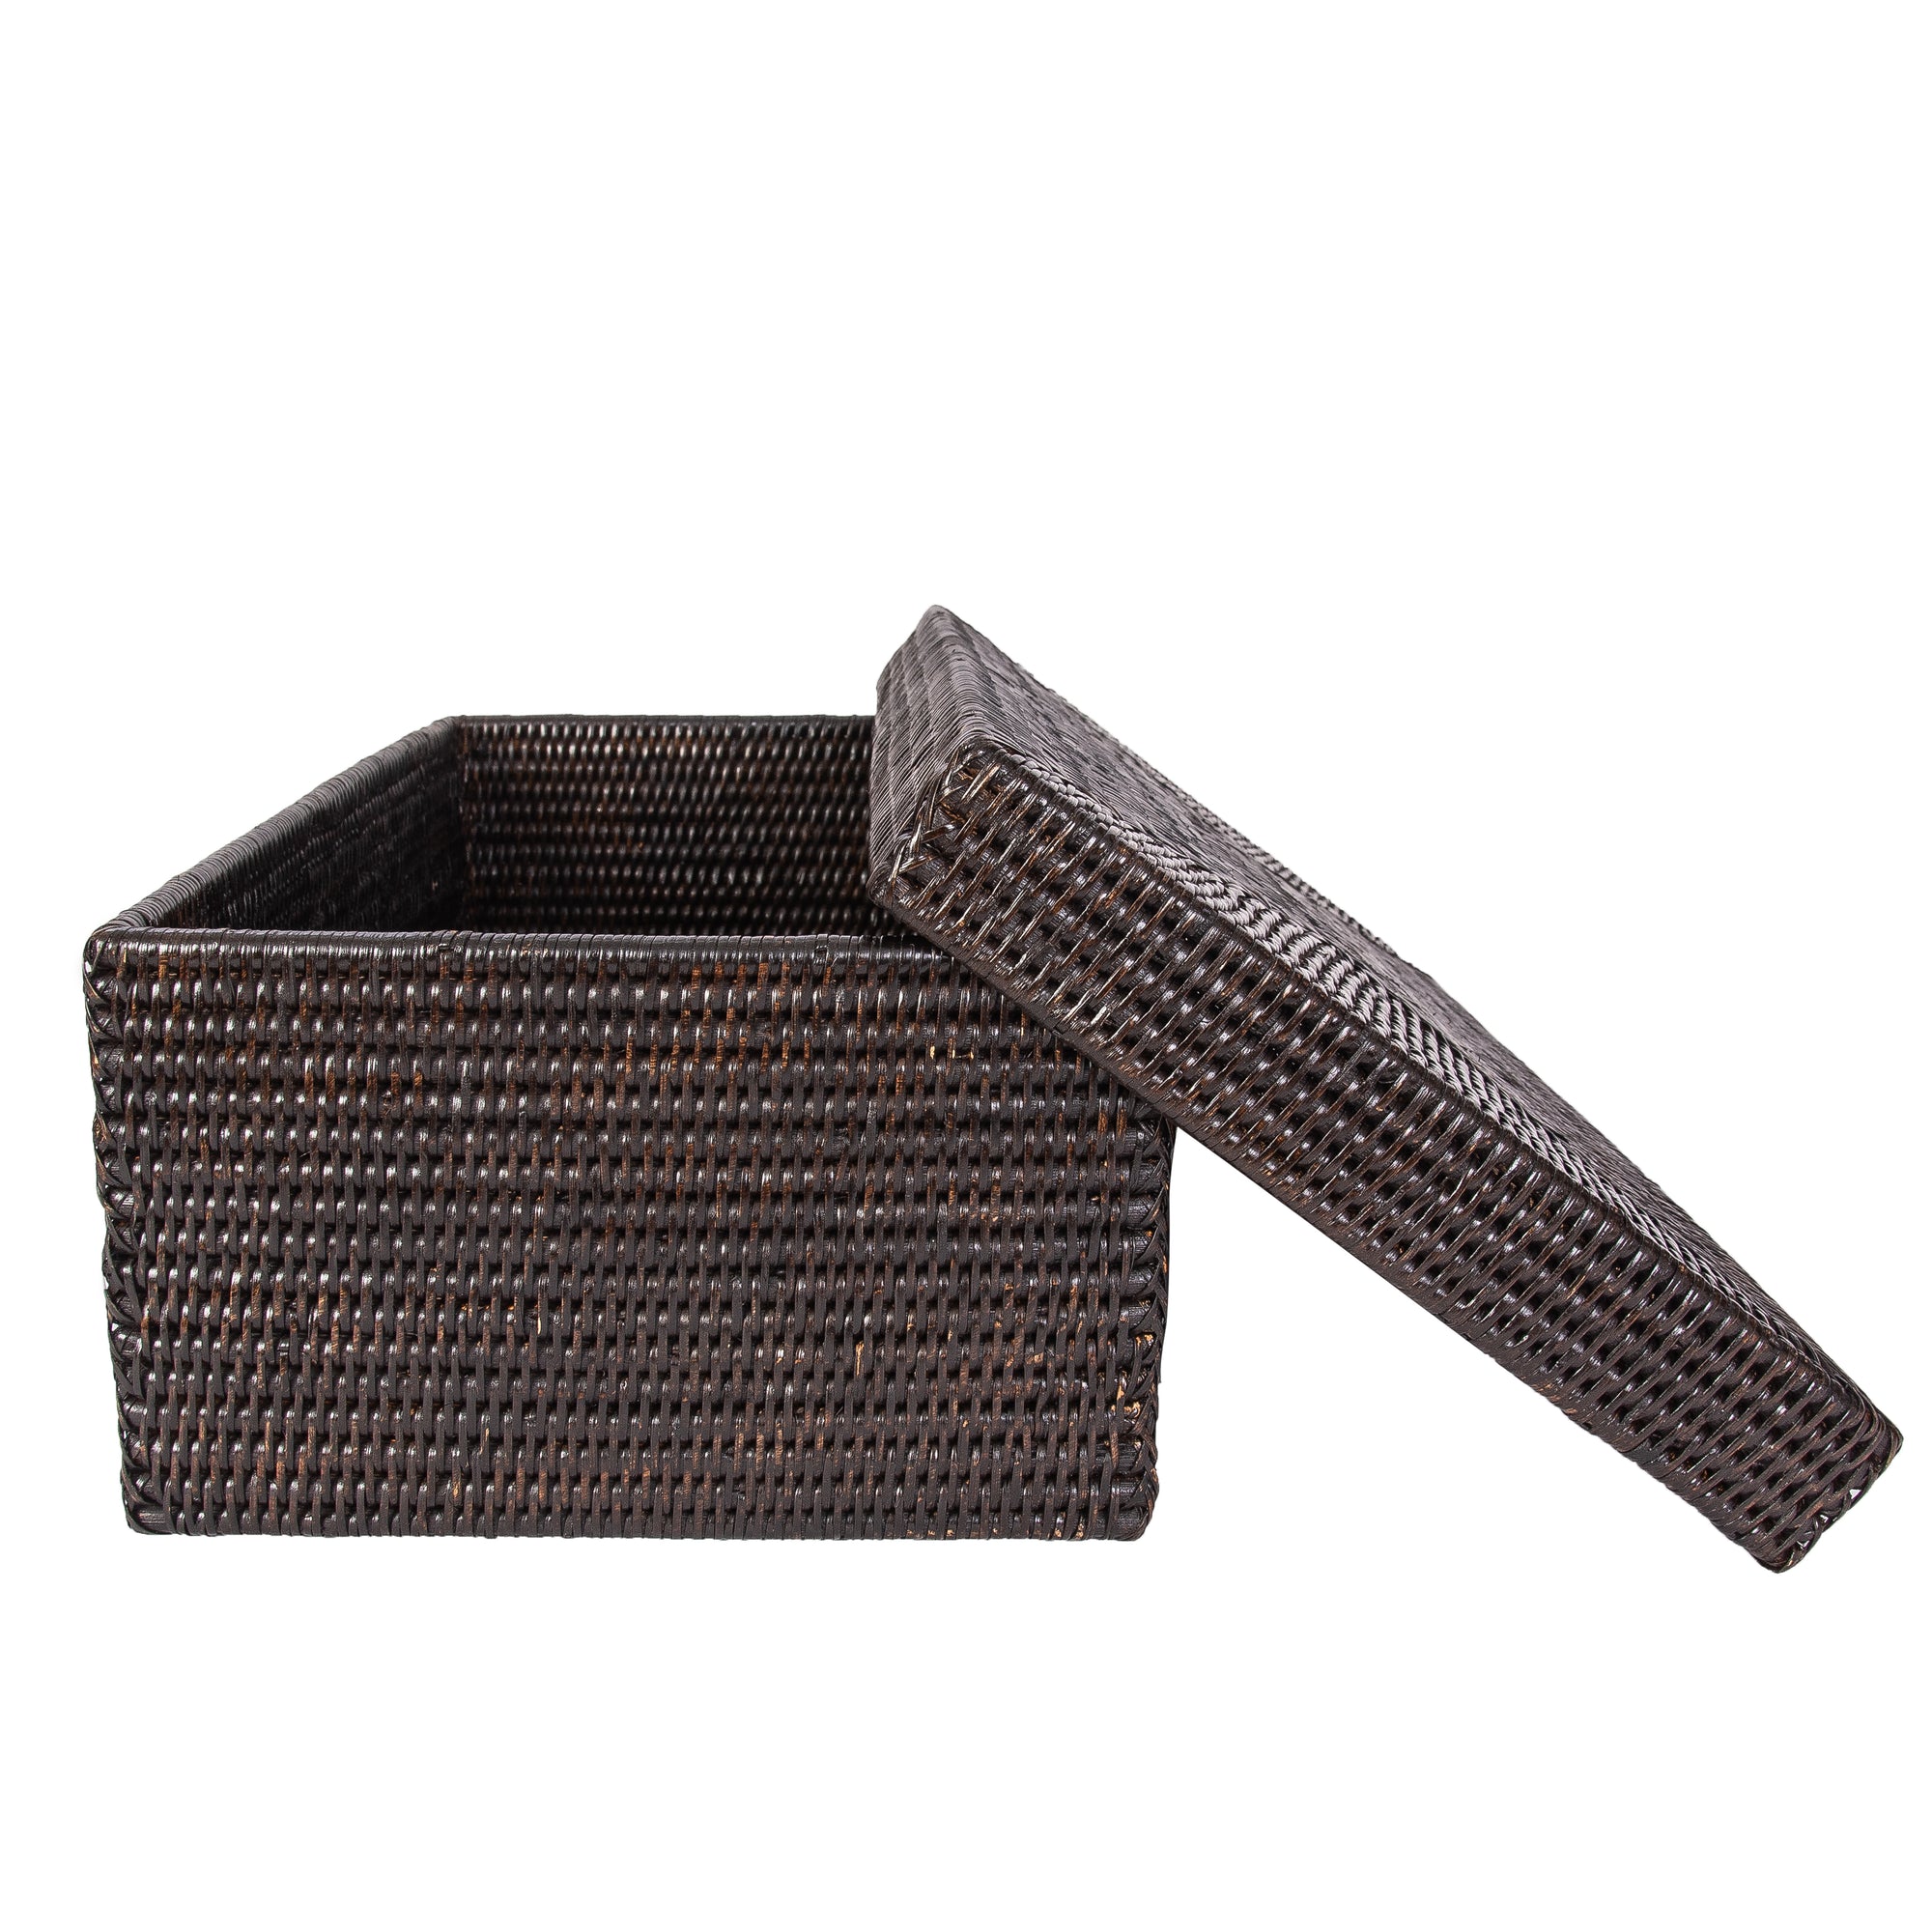 Rectangular Storage Basket with Lid, Rattan Storage Baskets for